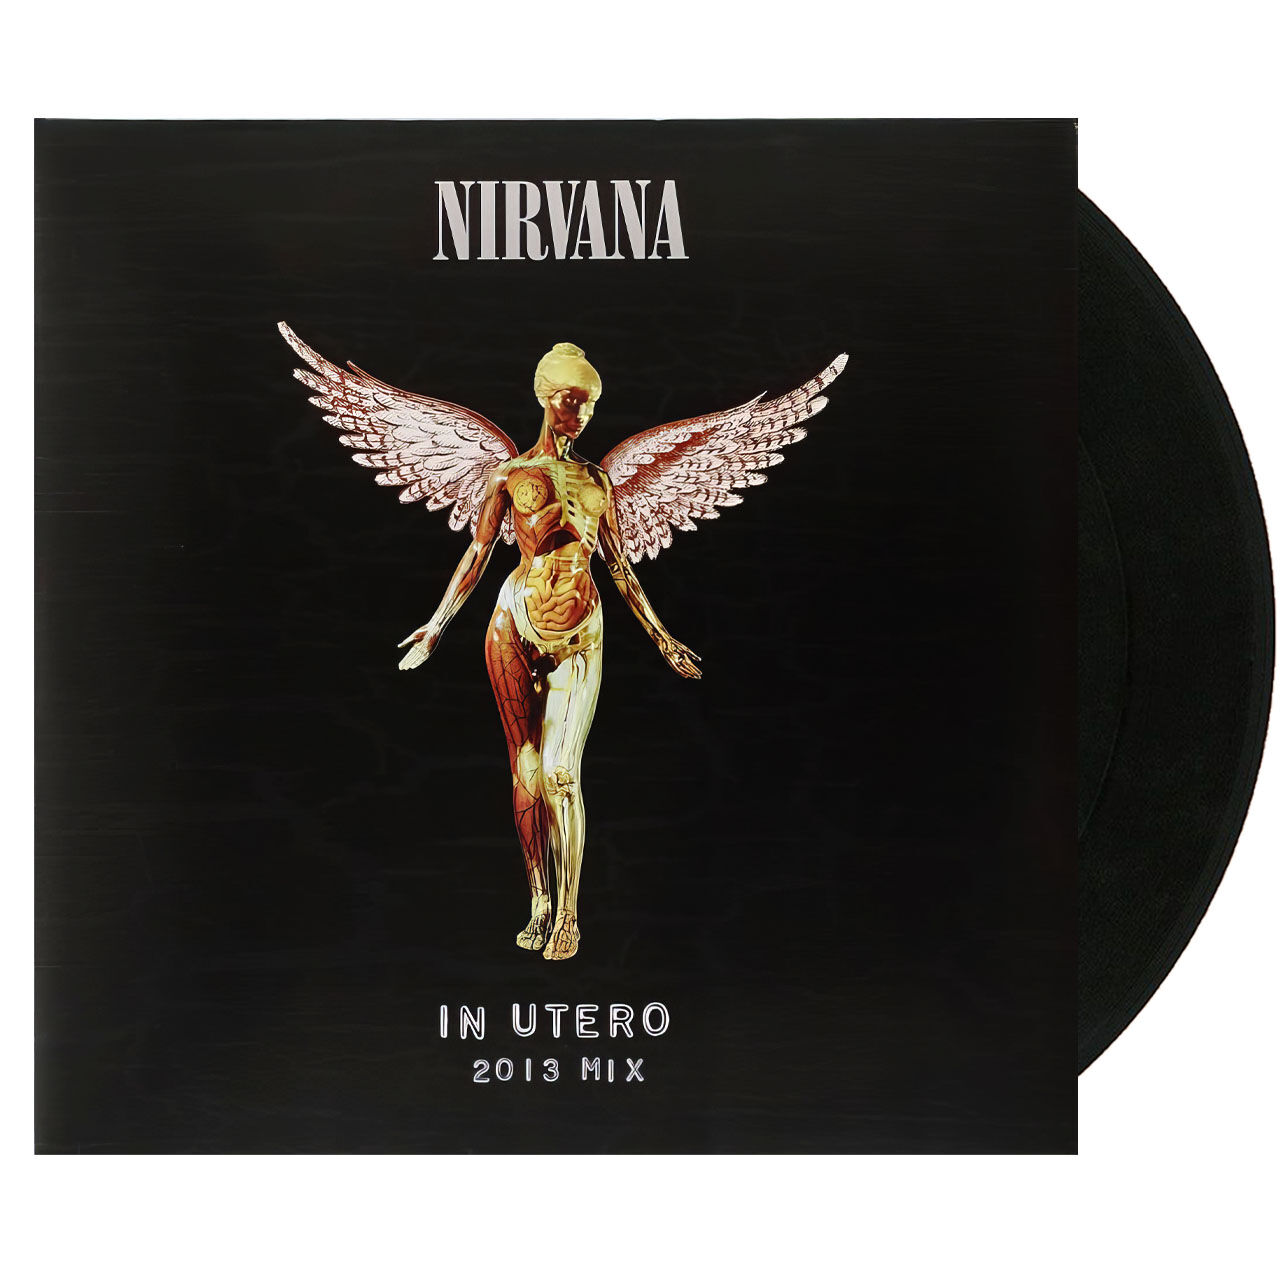 NIRVANA In Utero 2013 Mix Black 2LP Vinyl